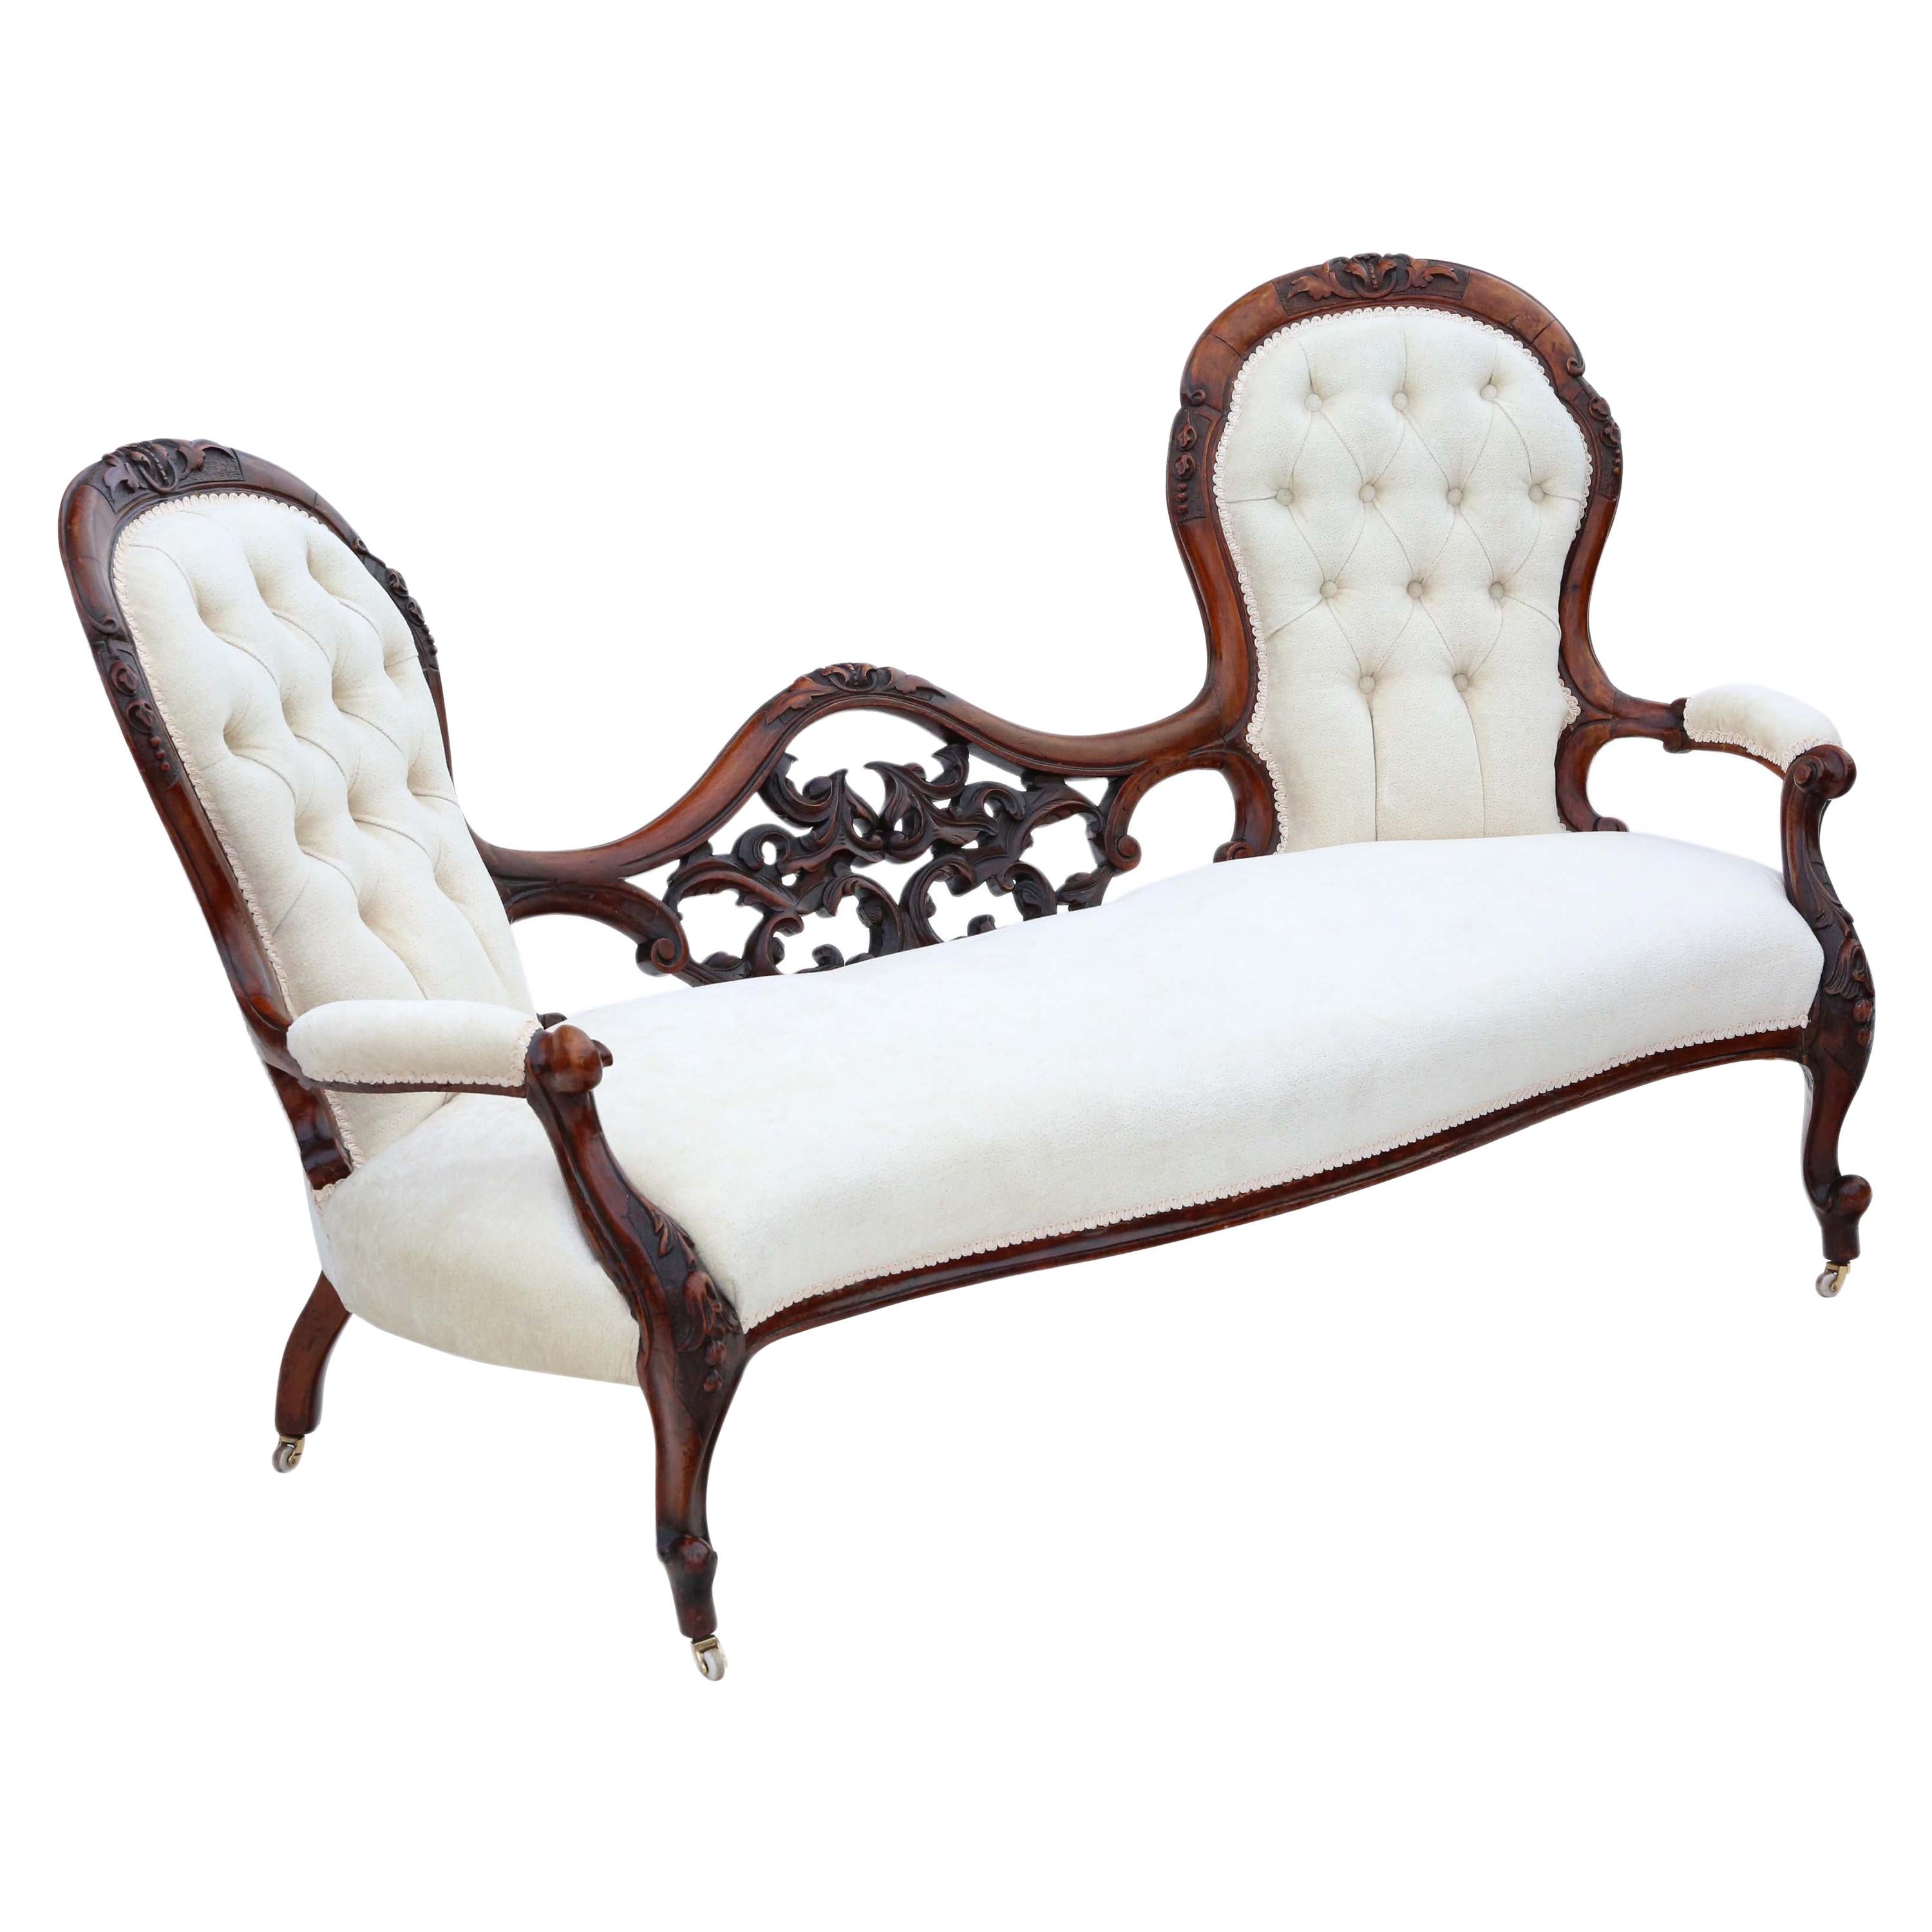 Antique Victorian C1860 Walnut Chaise Longue or Conversation Sofa